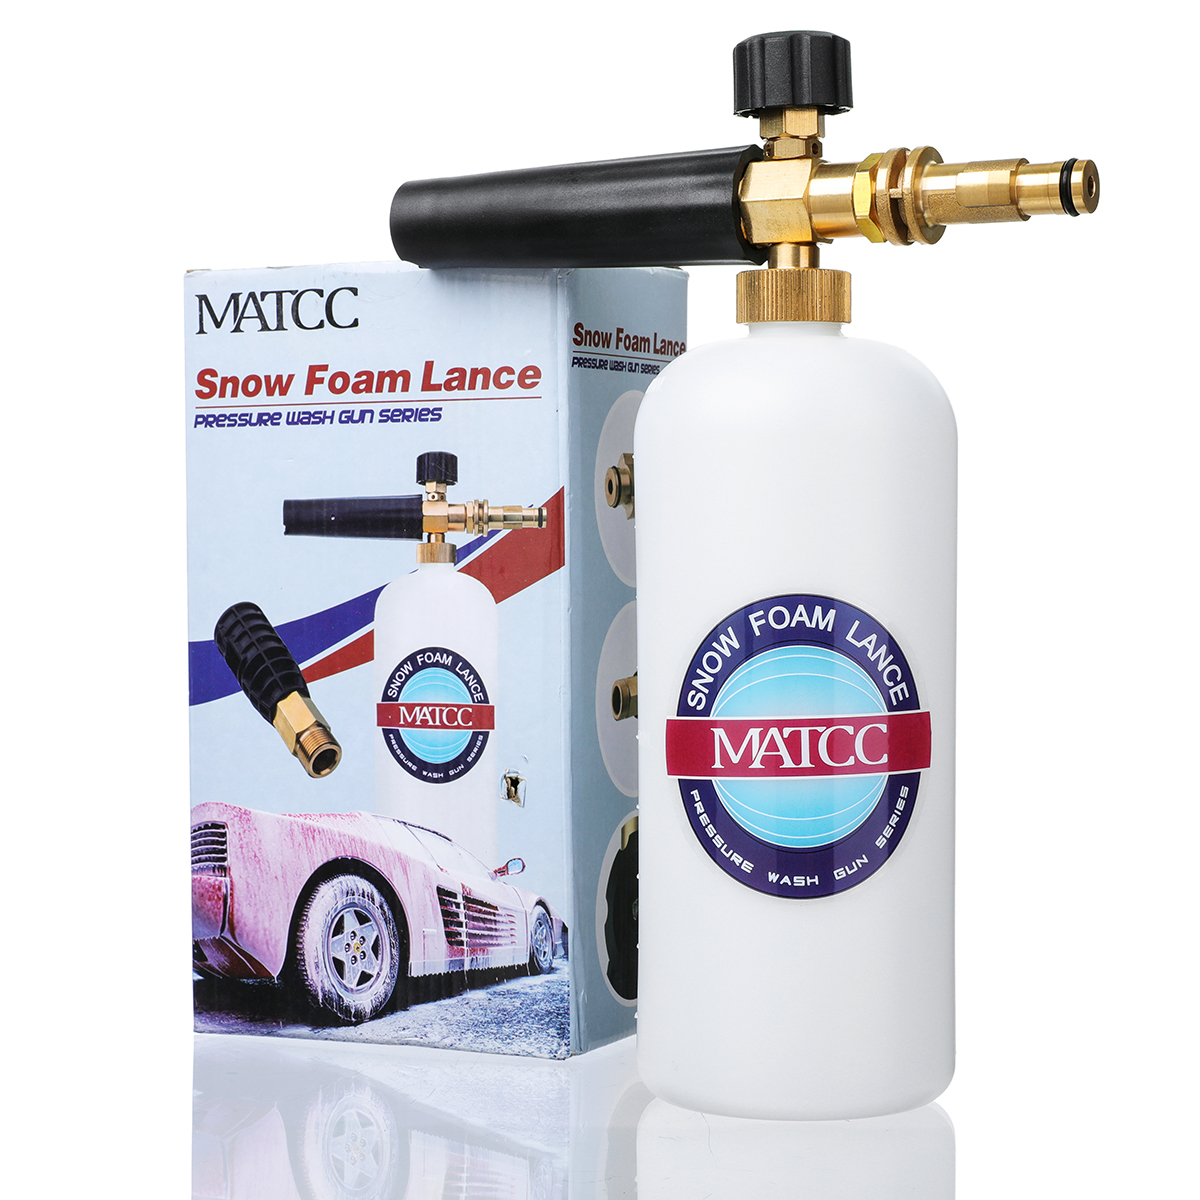 MATCC-Adjustable-Foam-Cannon-1-Liter-Bottle-Snow-Foam-Lance-for-SPX-Series-Electric-Pressure-Washers-1368306-9